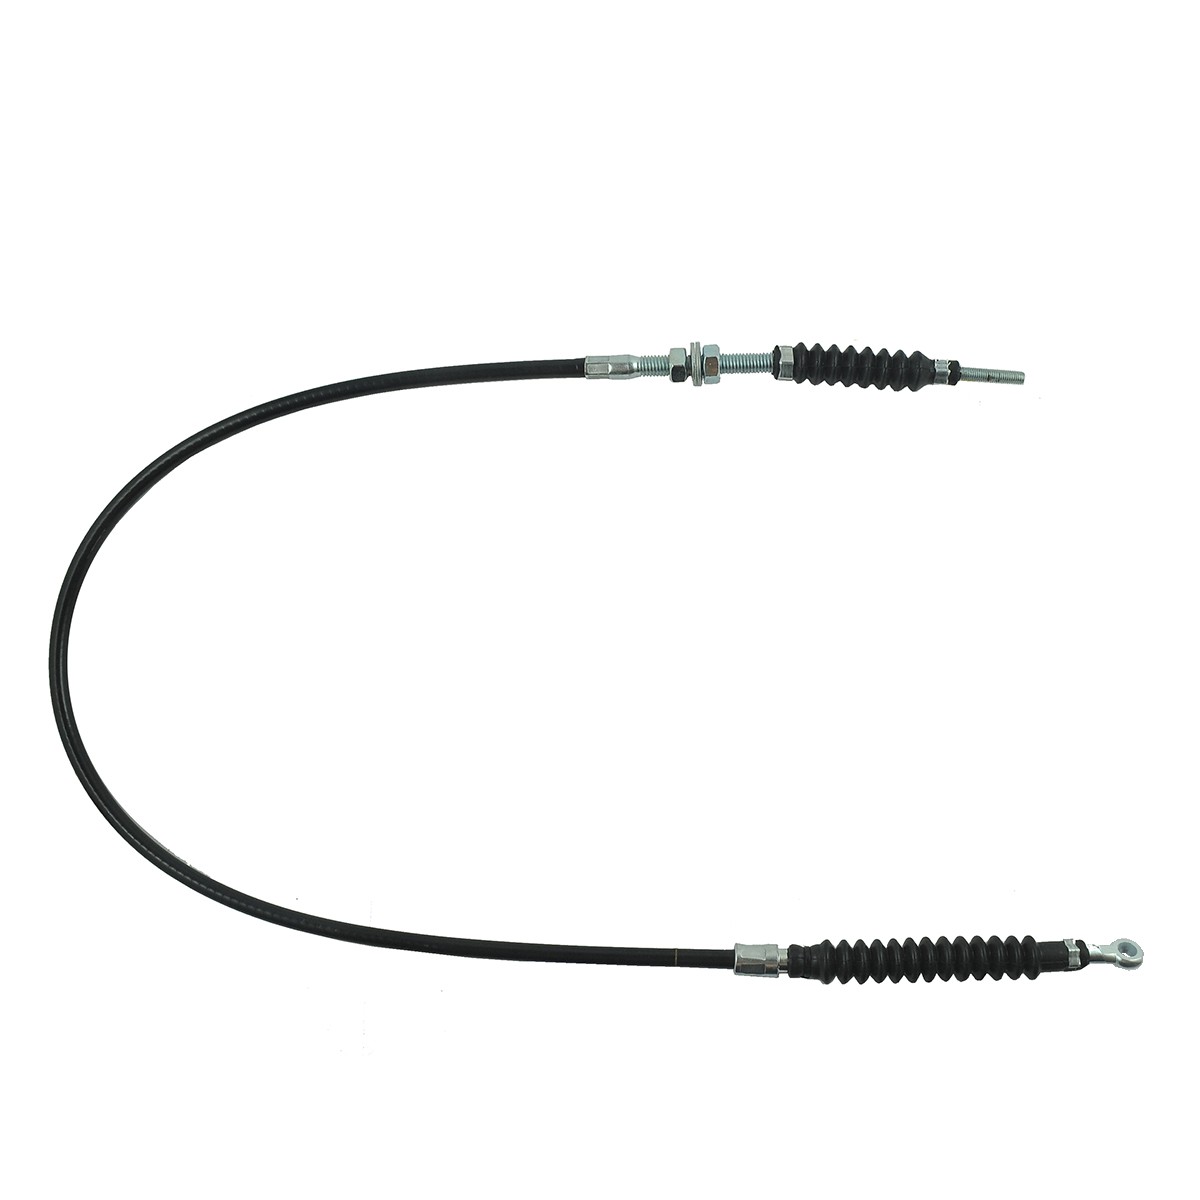 Throttle cable / 870 mm / Kubota M5040/M6040/M7040/M9540 / 3C081-10750 / 5-25-105-41